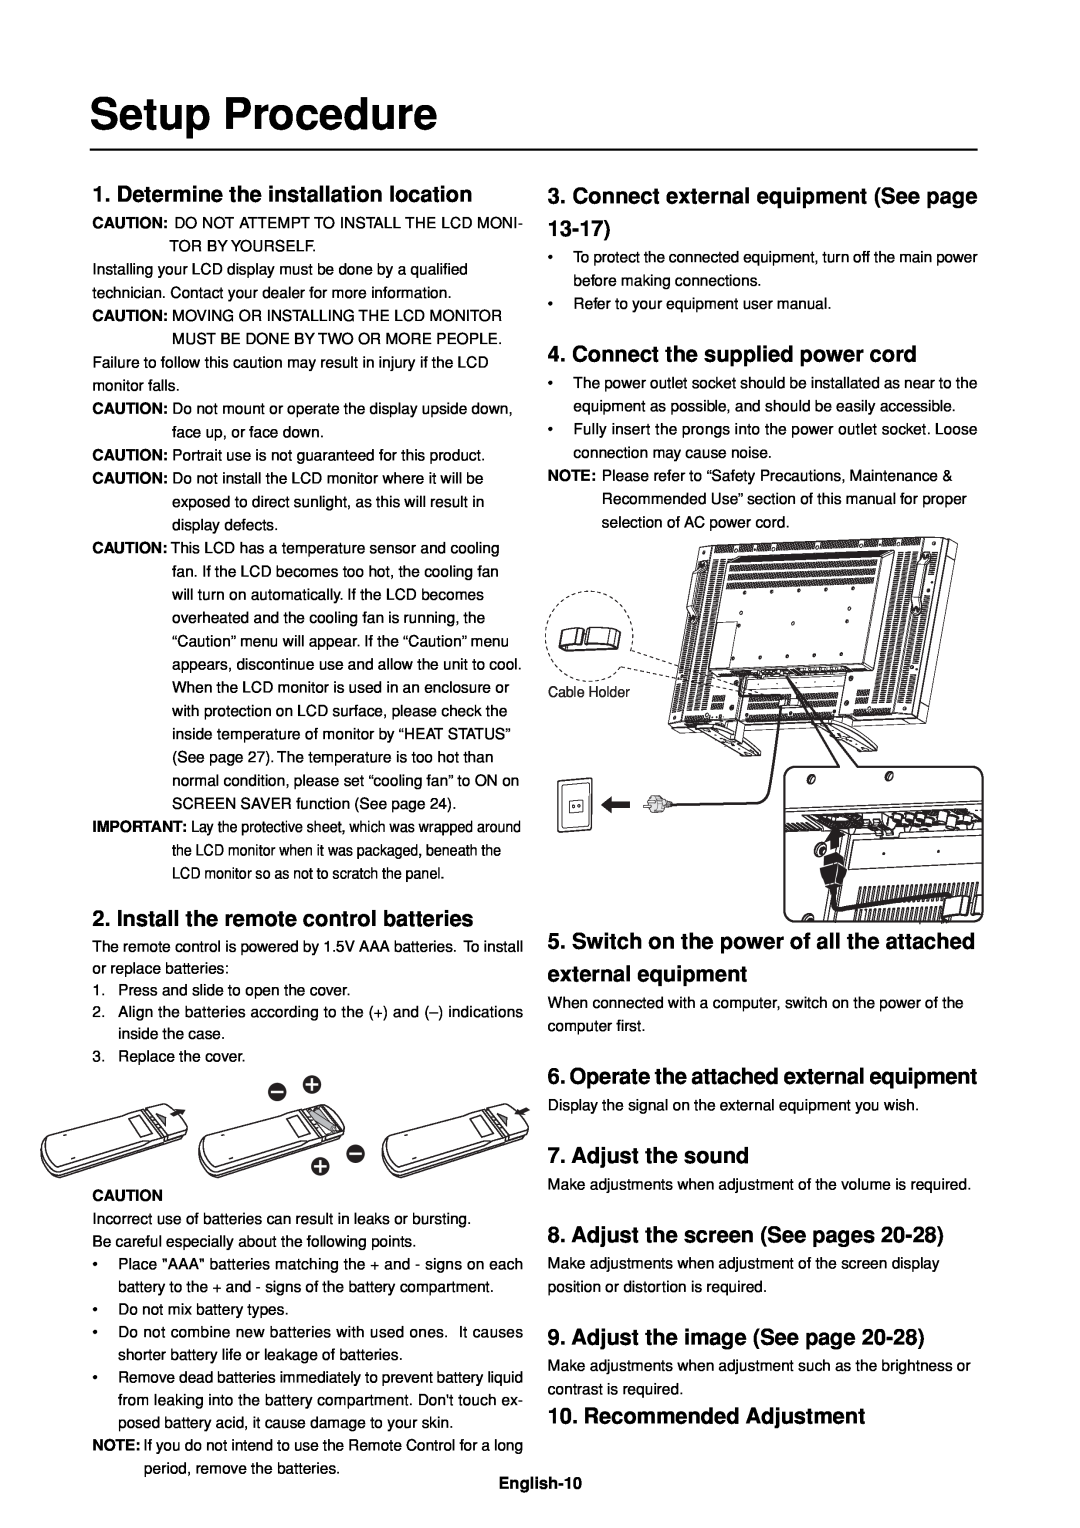 Mitsubishi Electronics LDT32IV (BH548) manual Setup Procedure, Determine the installation location, Adjust the sound 